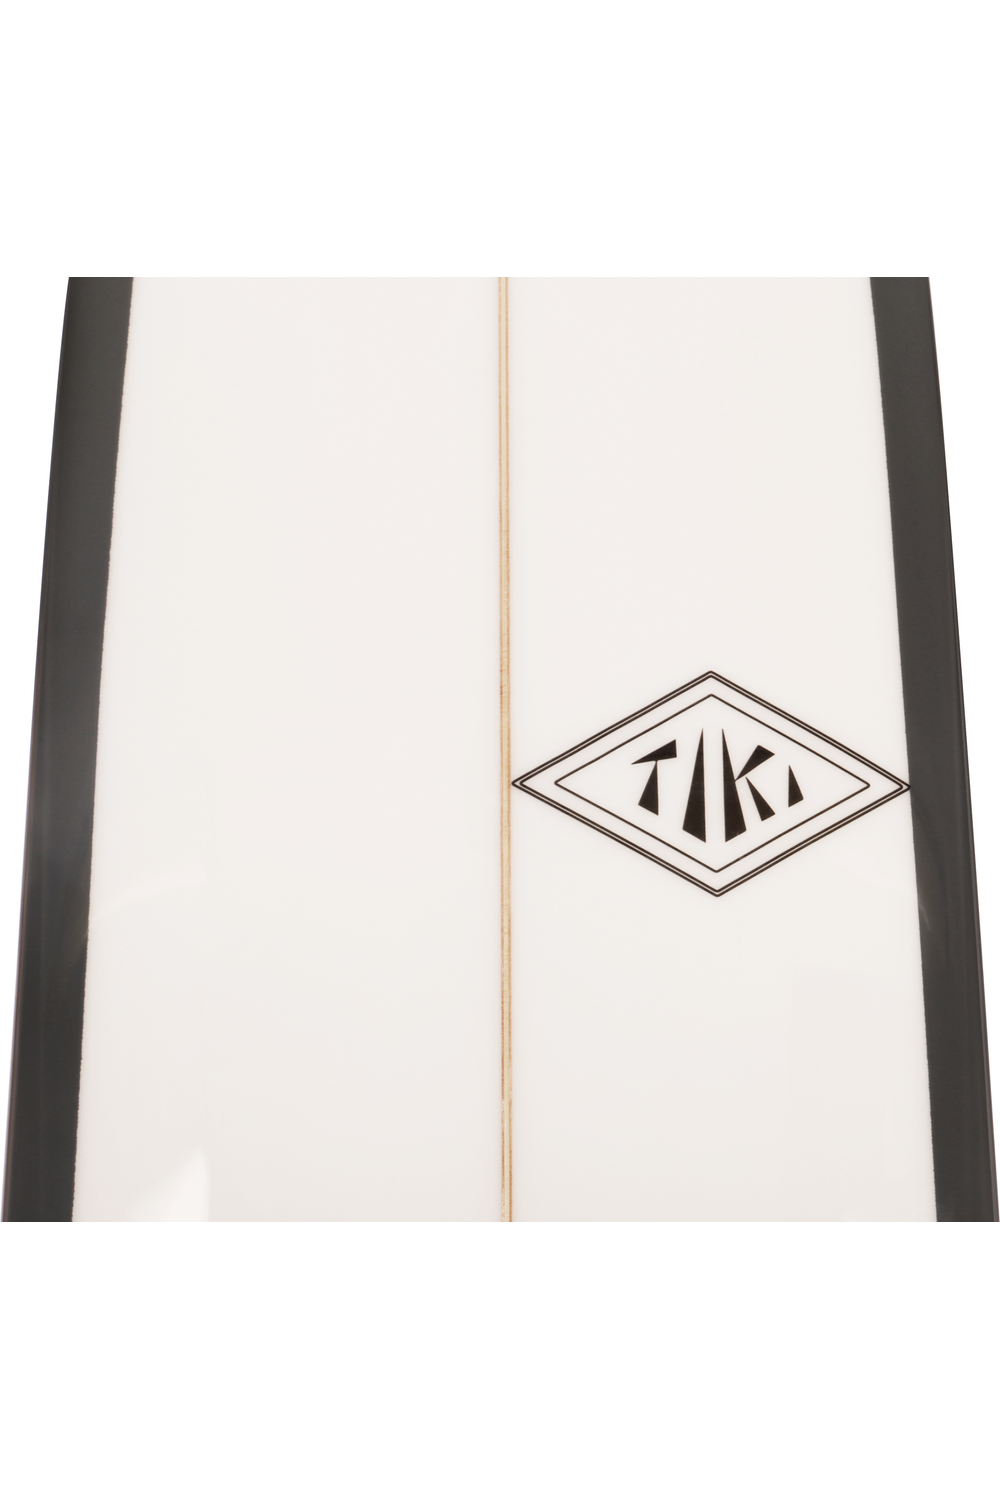 Tiki Custom Surfboard - 9'3 Totem Mal - Iron Grey